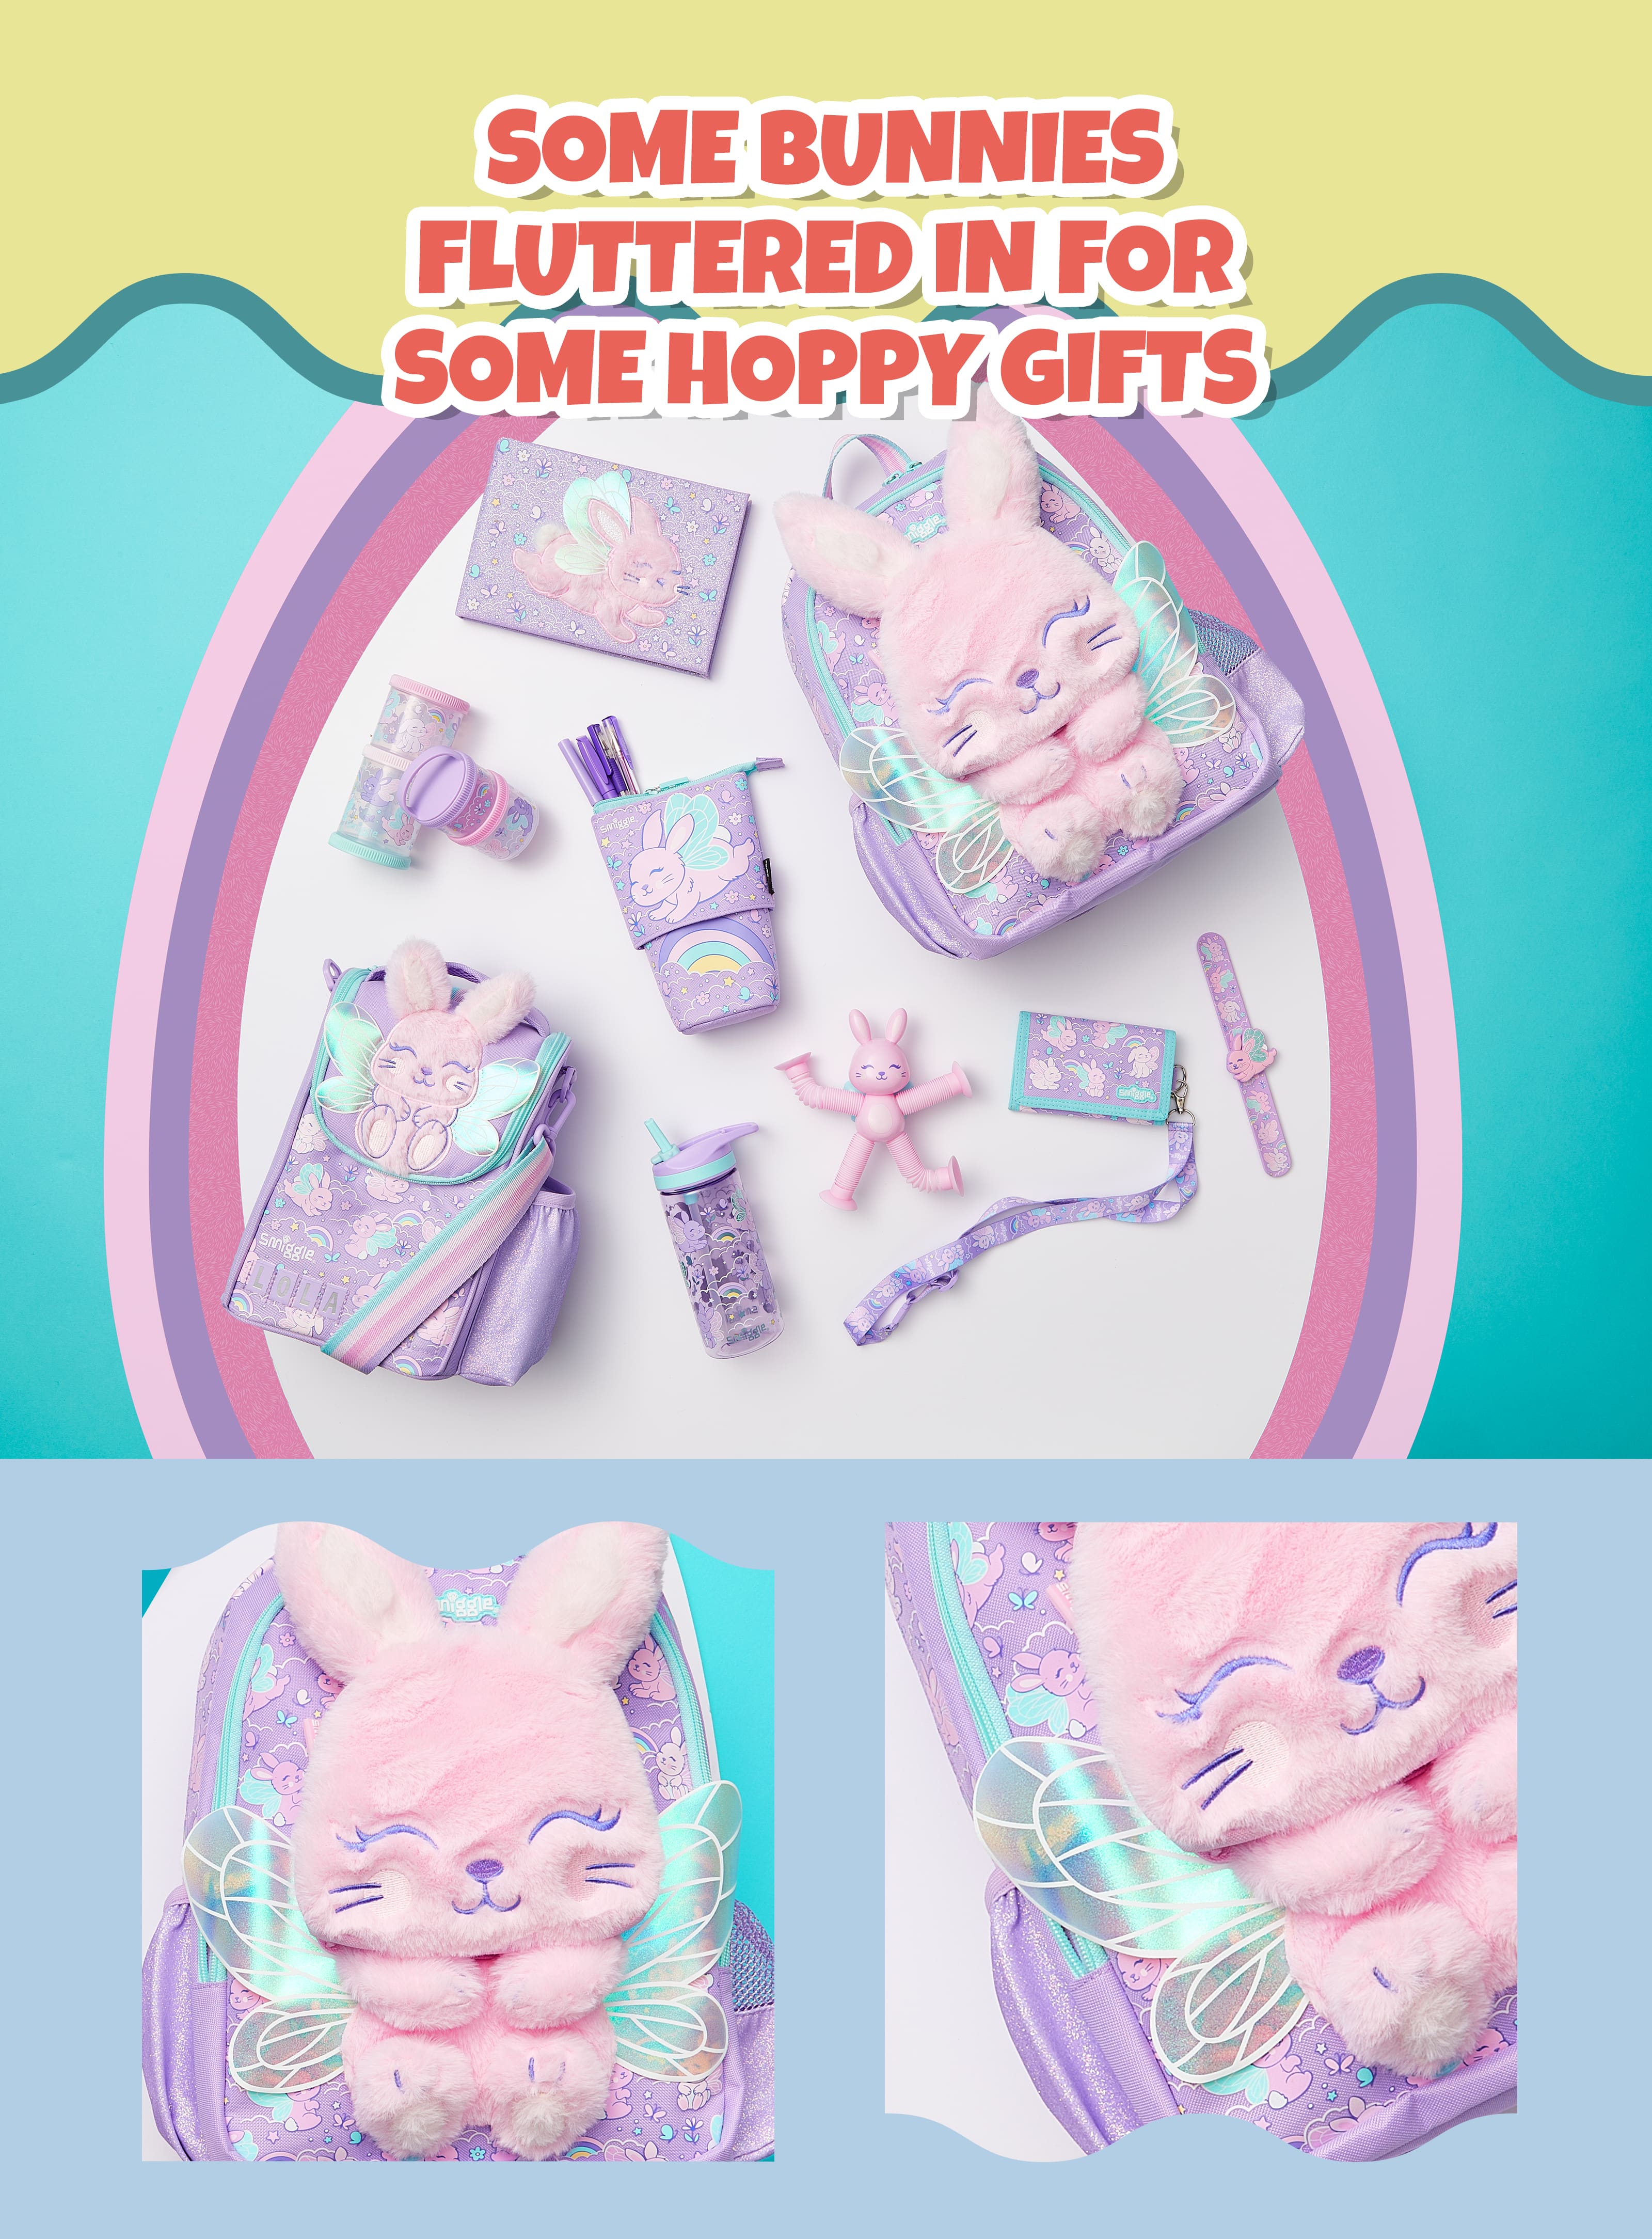 Hoppy gifts